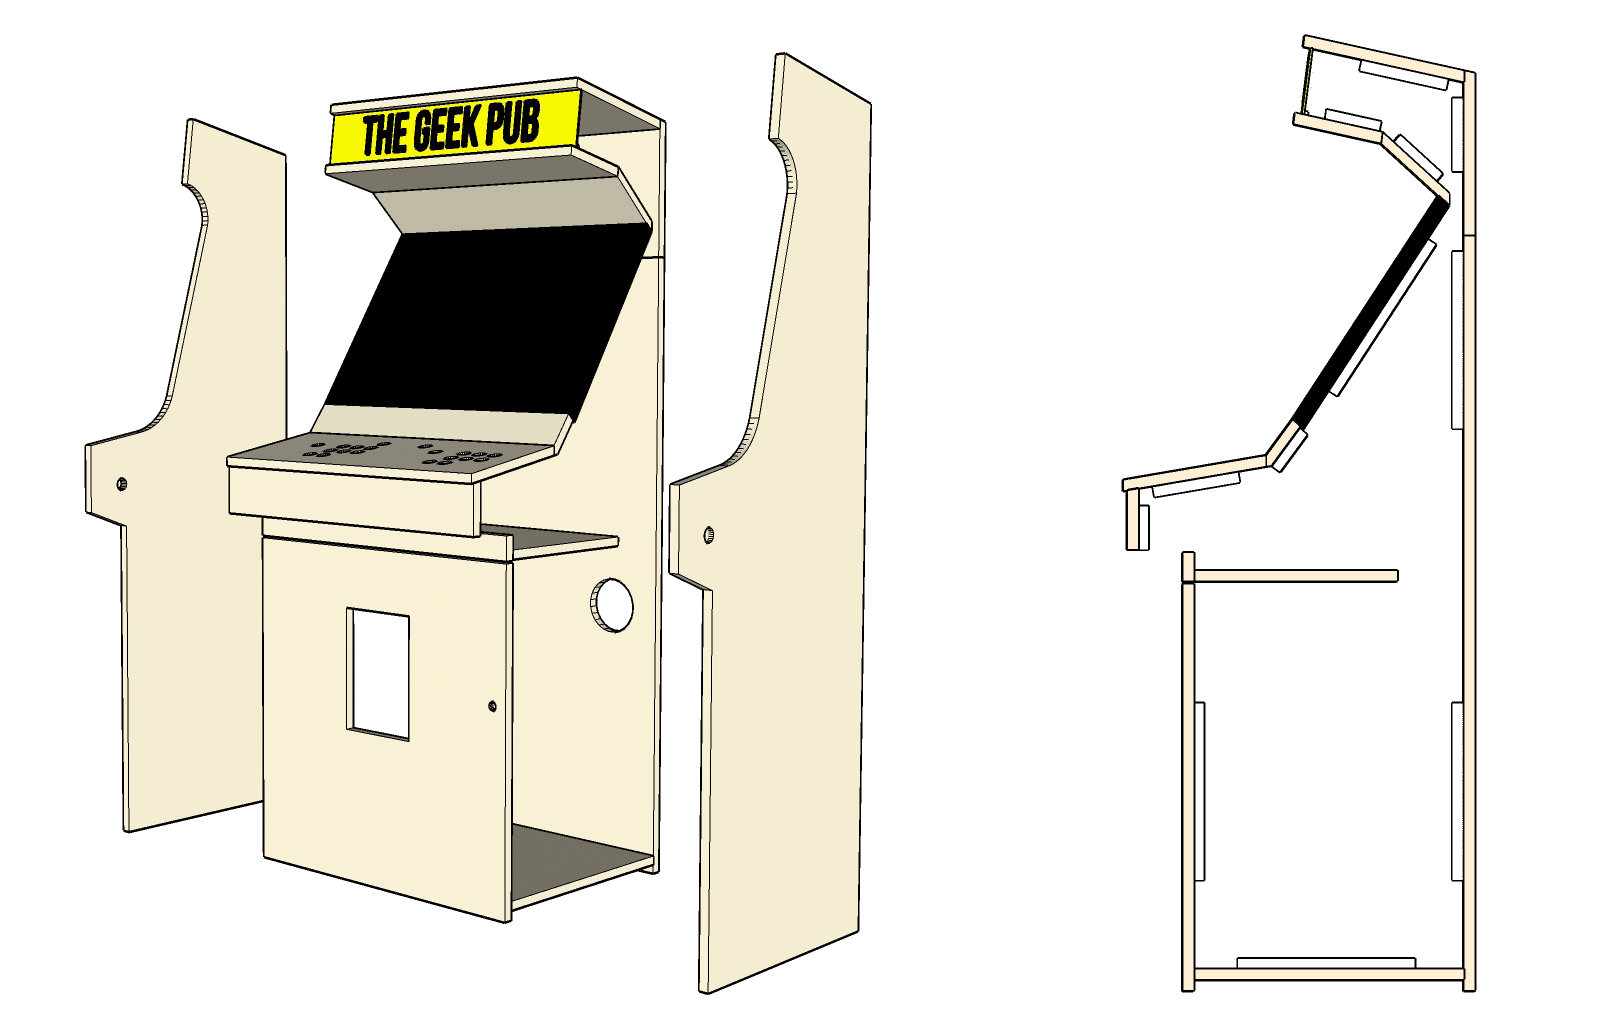 Arcade Cabinet Plans The Geek Pub